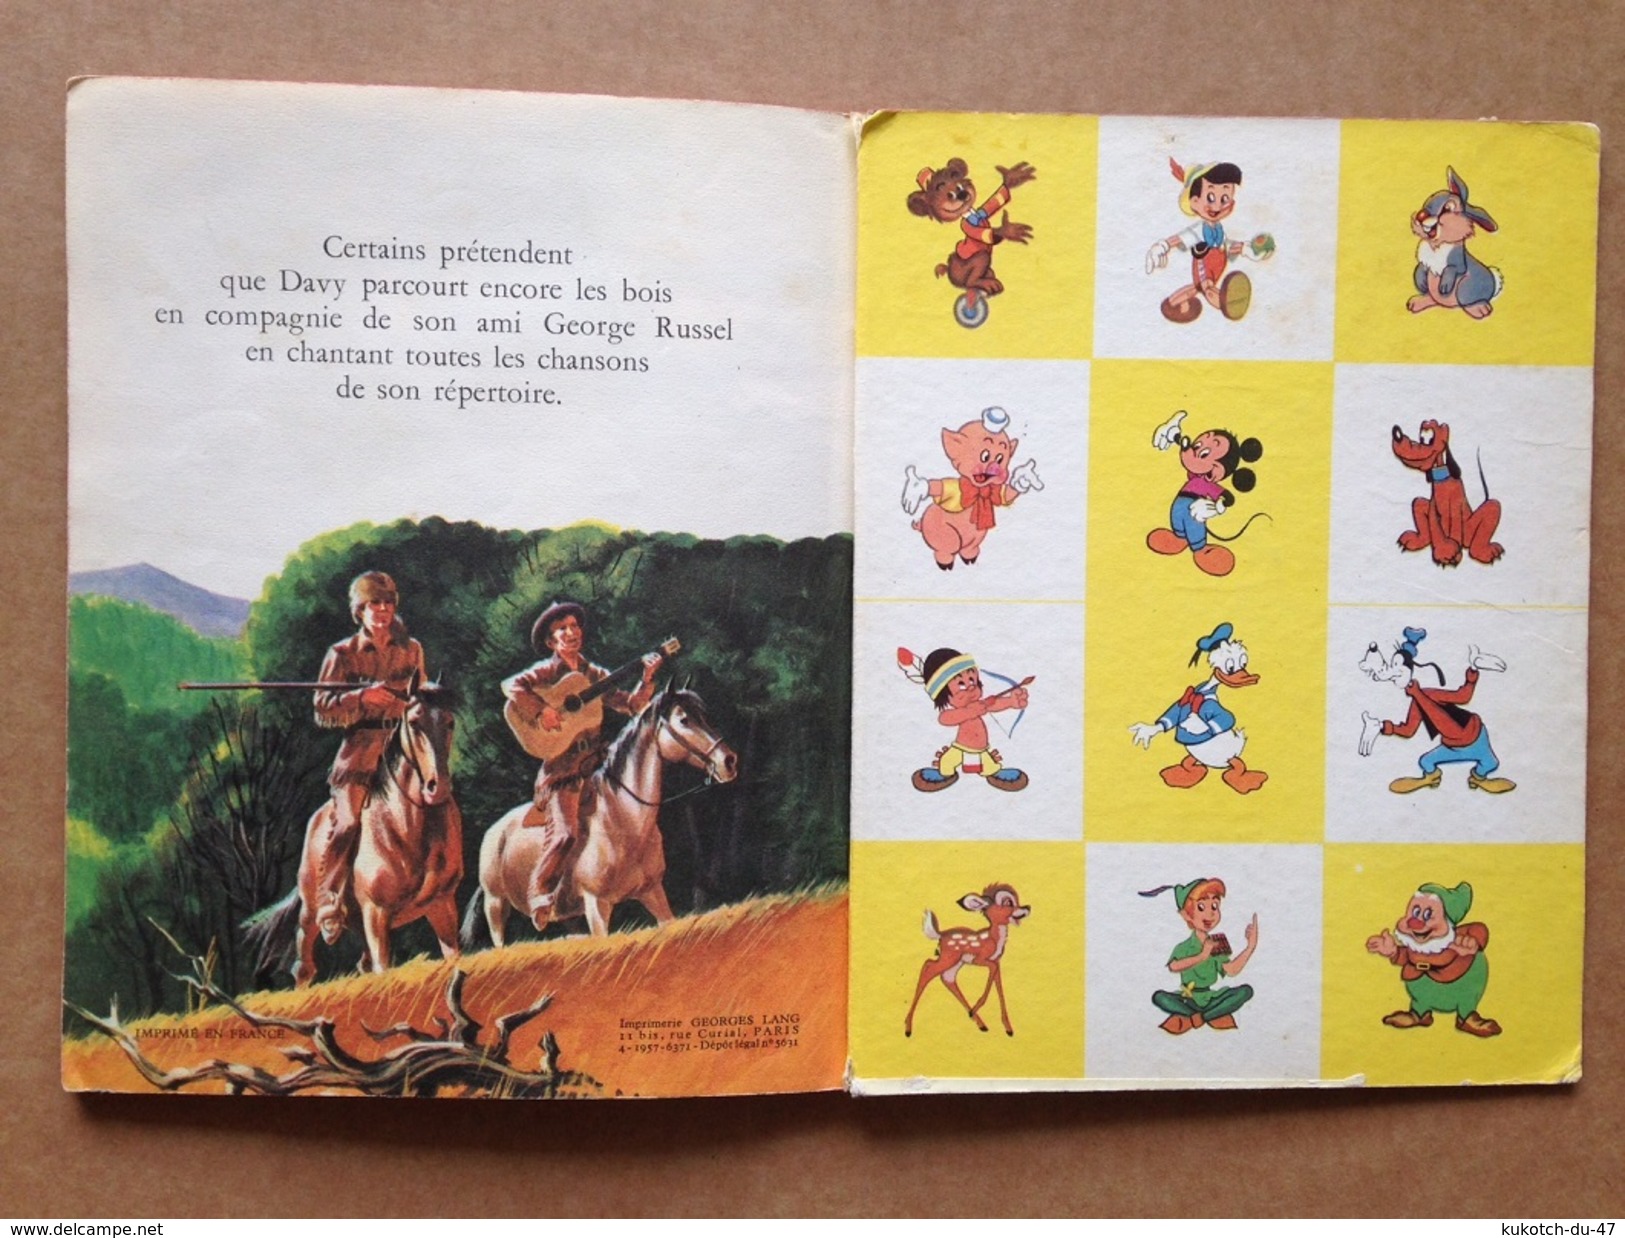 Disney Petit livret Davy Crockett (1957)